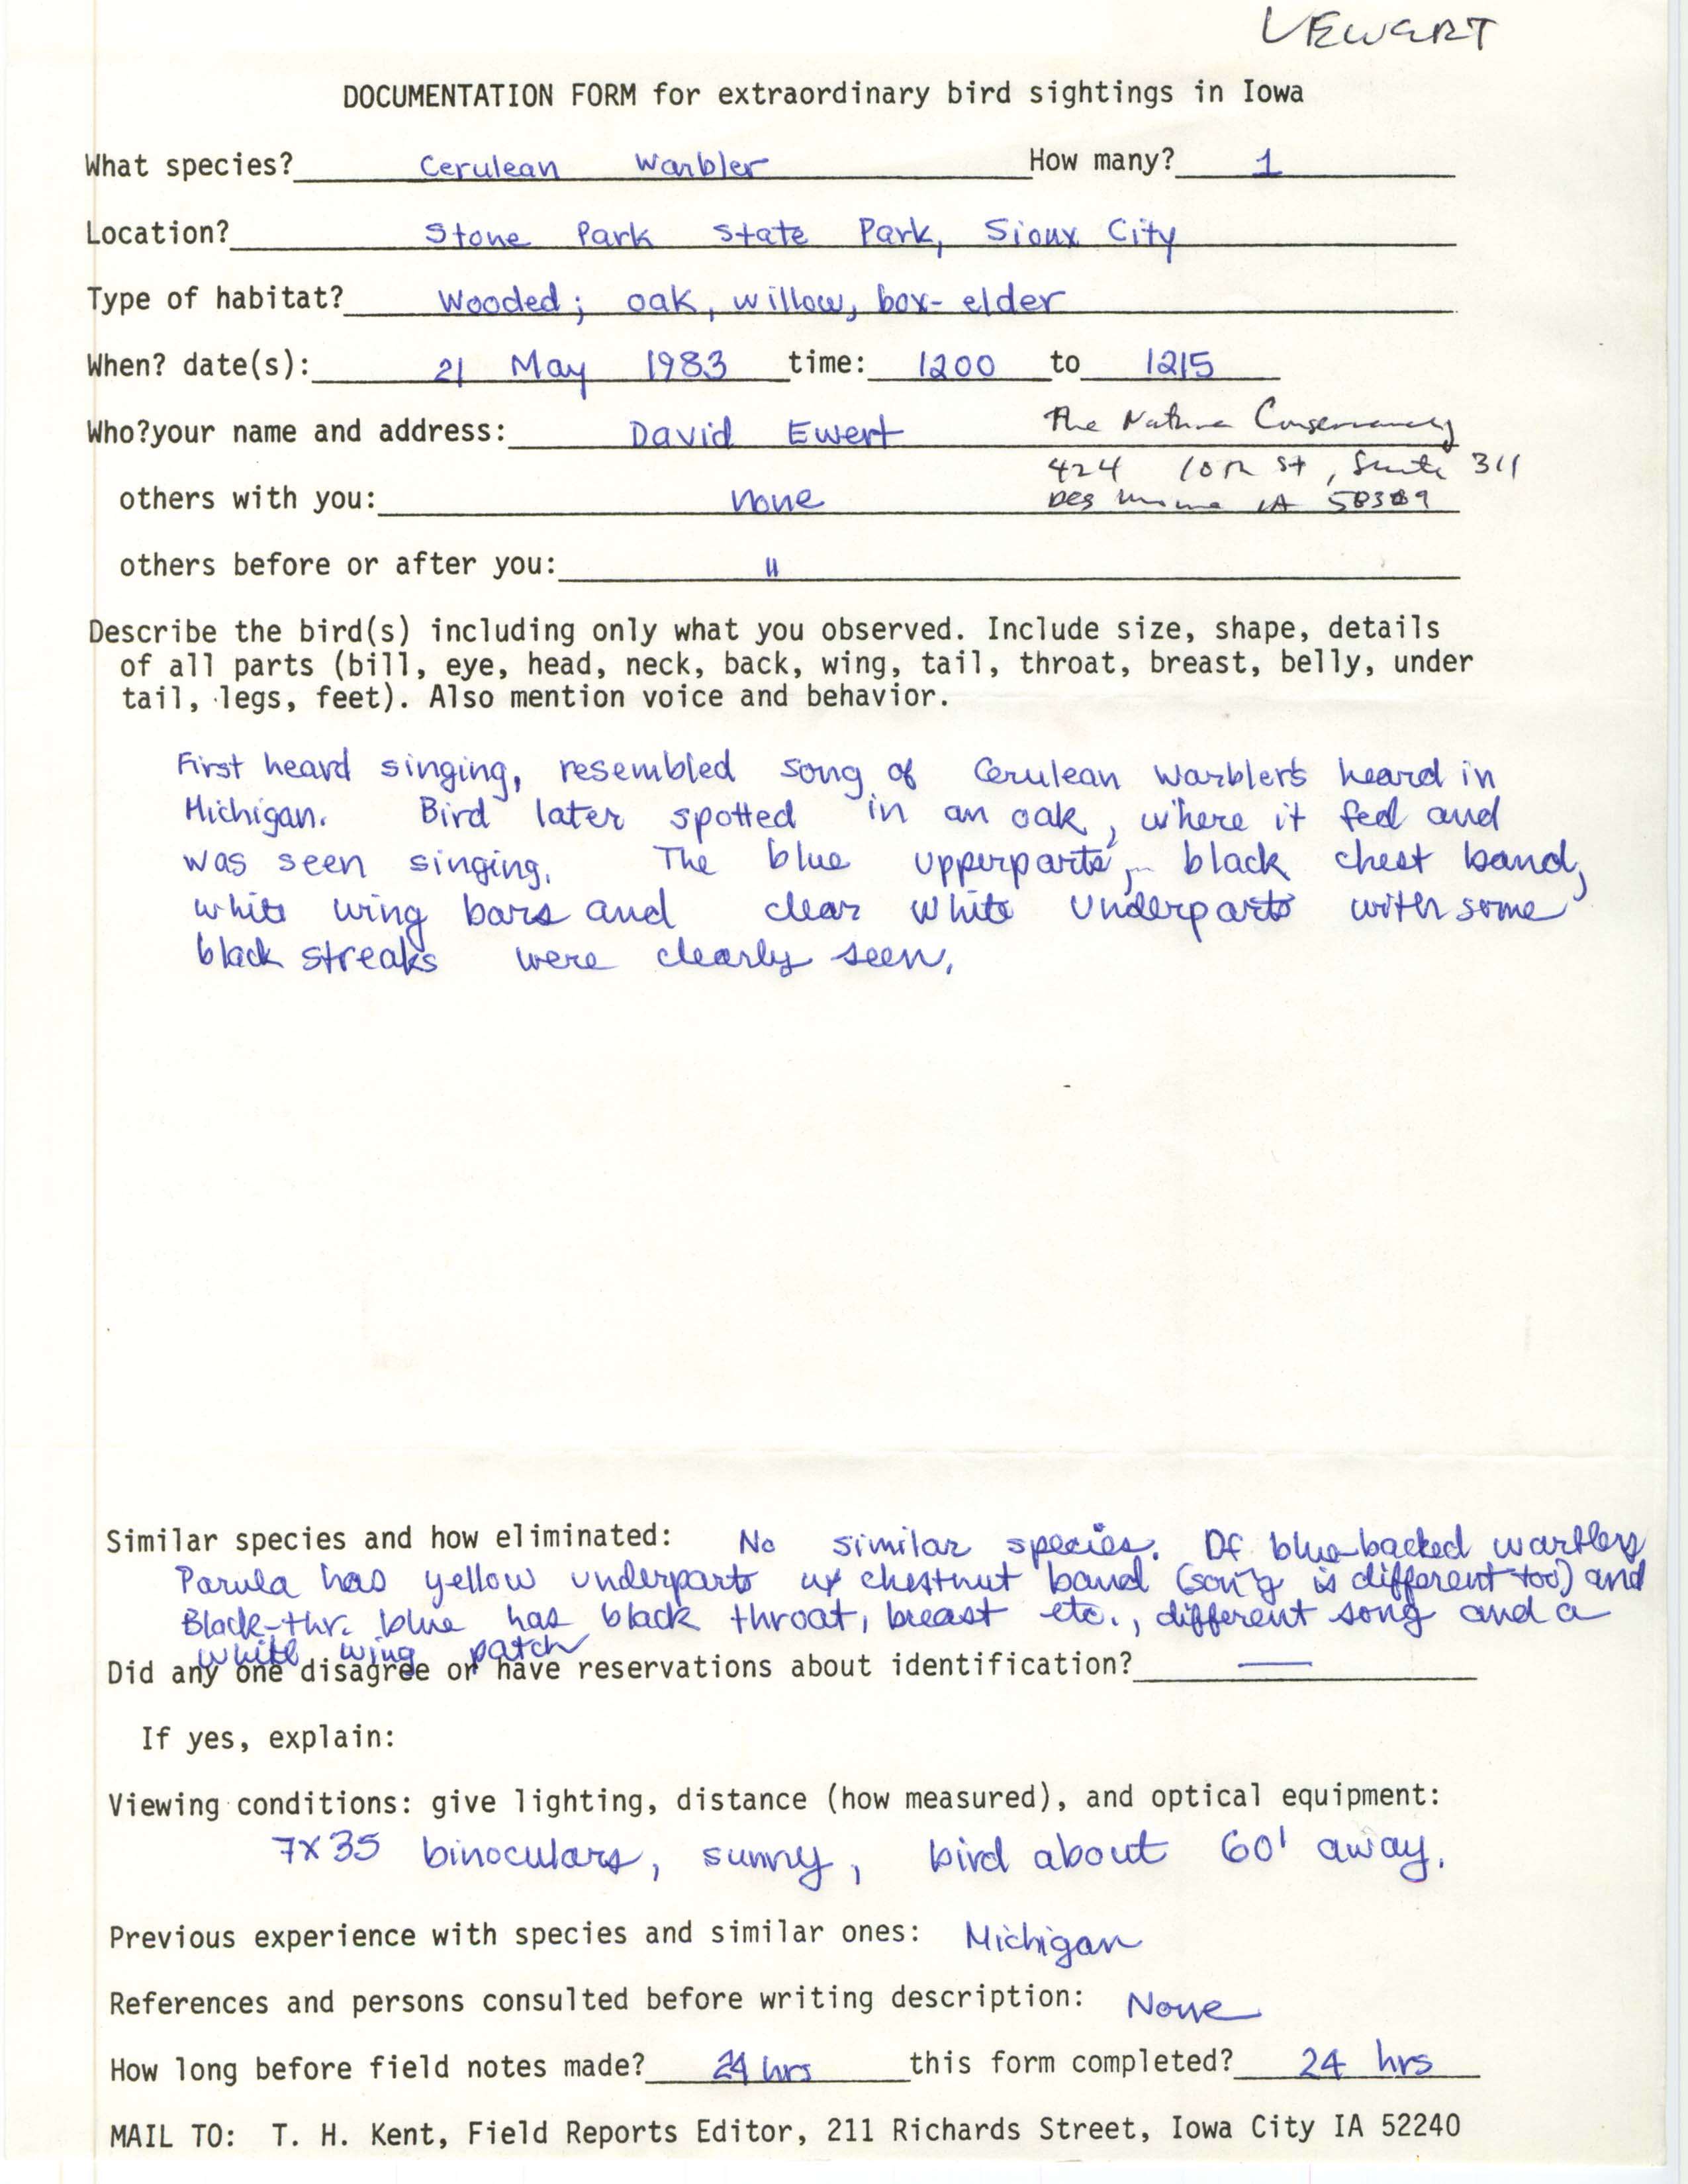 Rare bird documentation form for Cerulean Warbler at Stone State Park, 1983